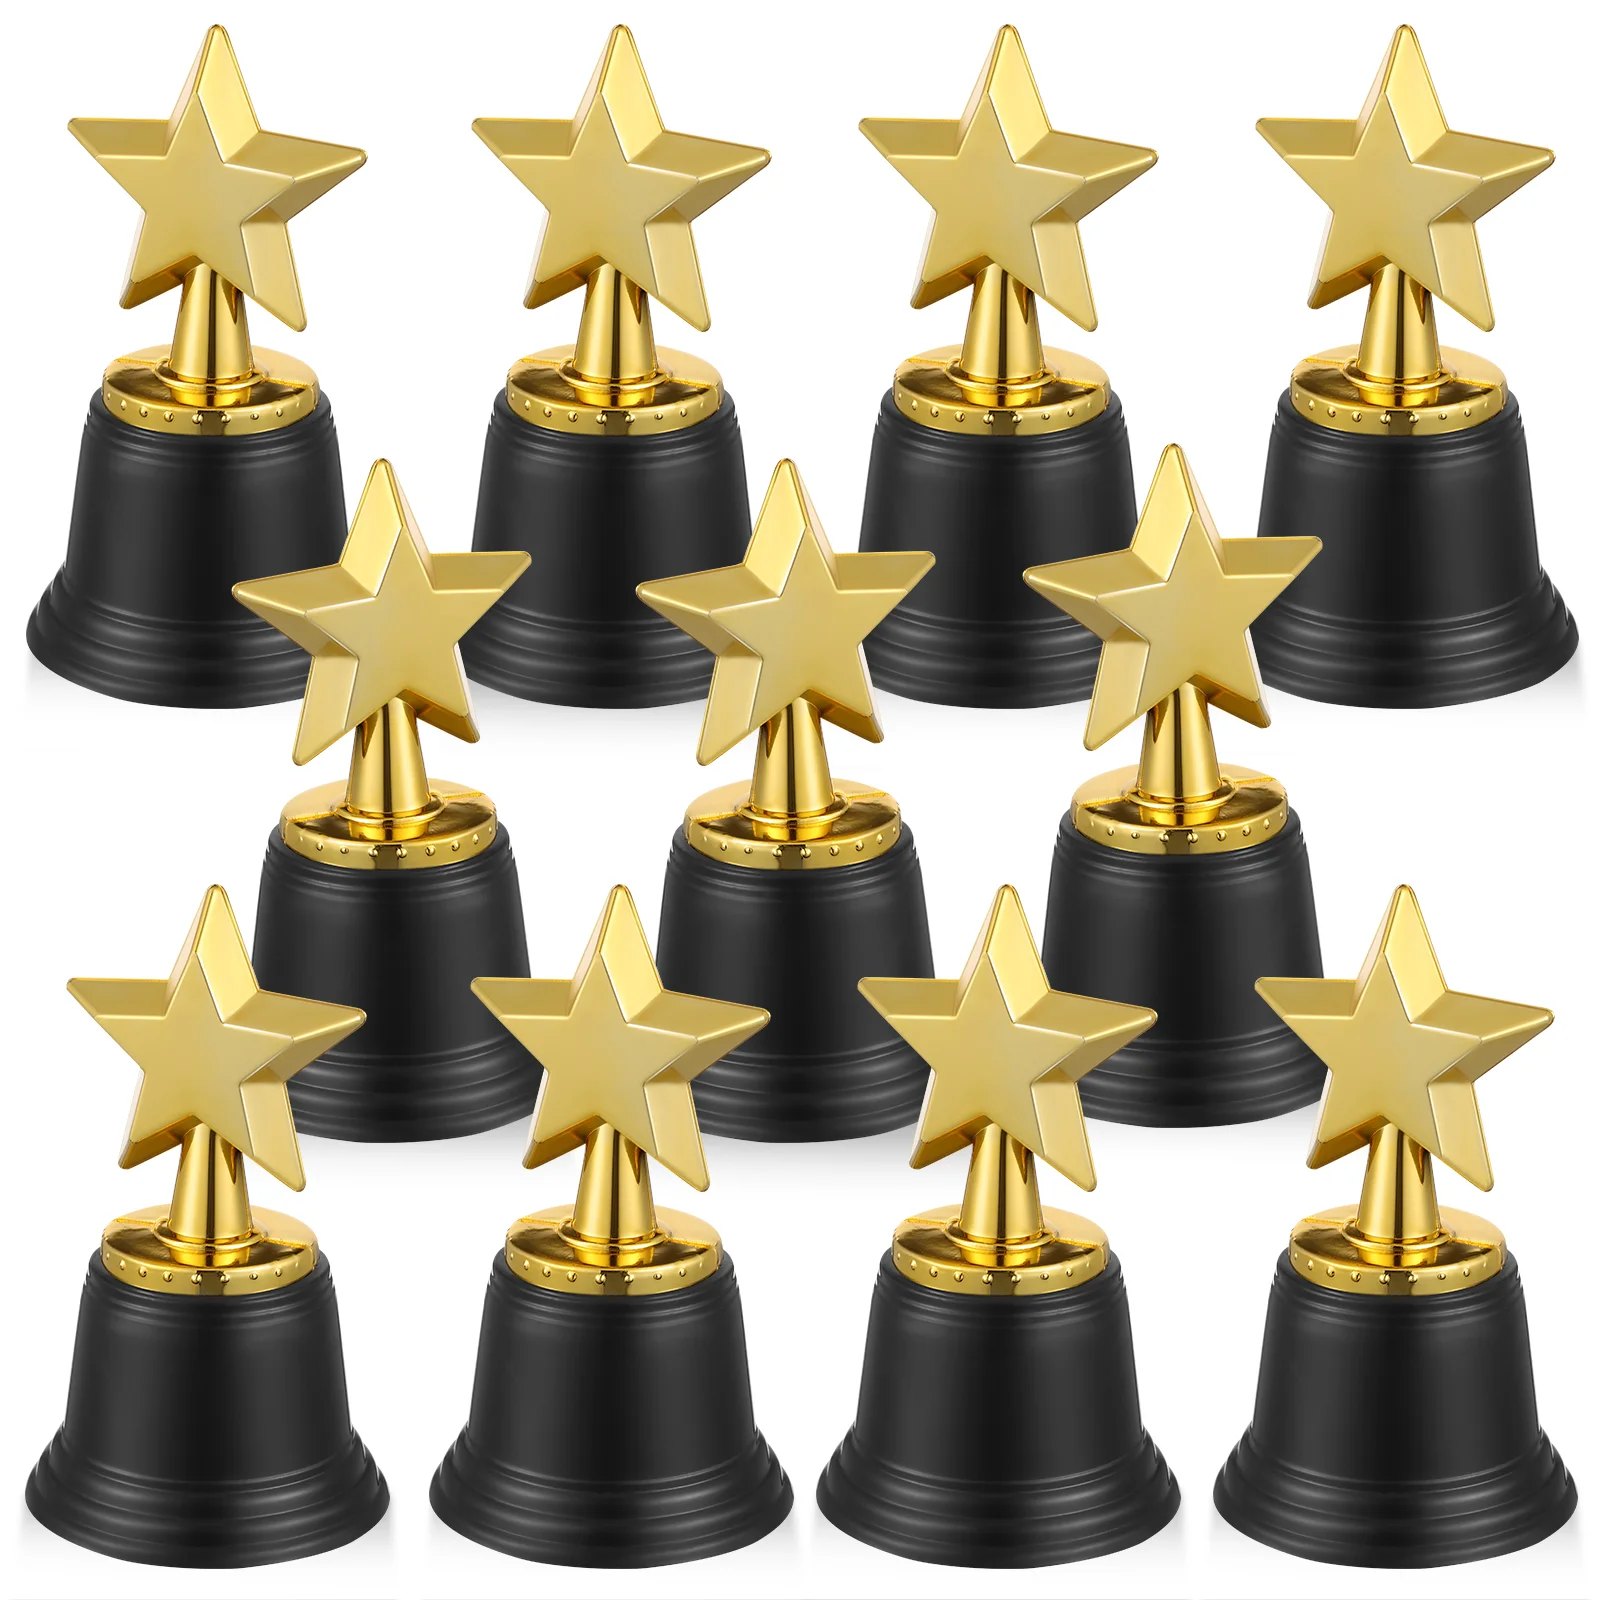 

20 Pcs Trophy Metal Trophies Mini Awards Trophys Cup Golden Childrens Toys Kids Five-point Star Football